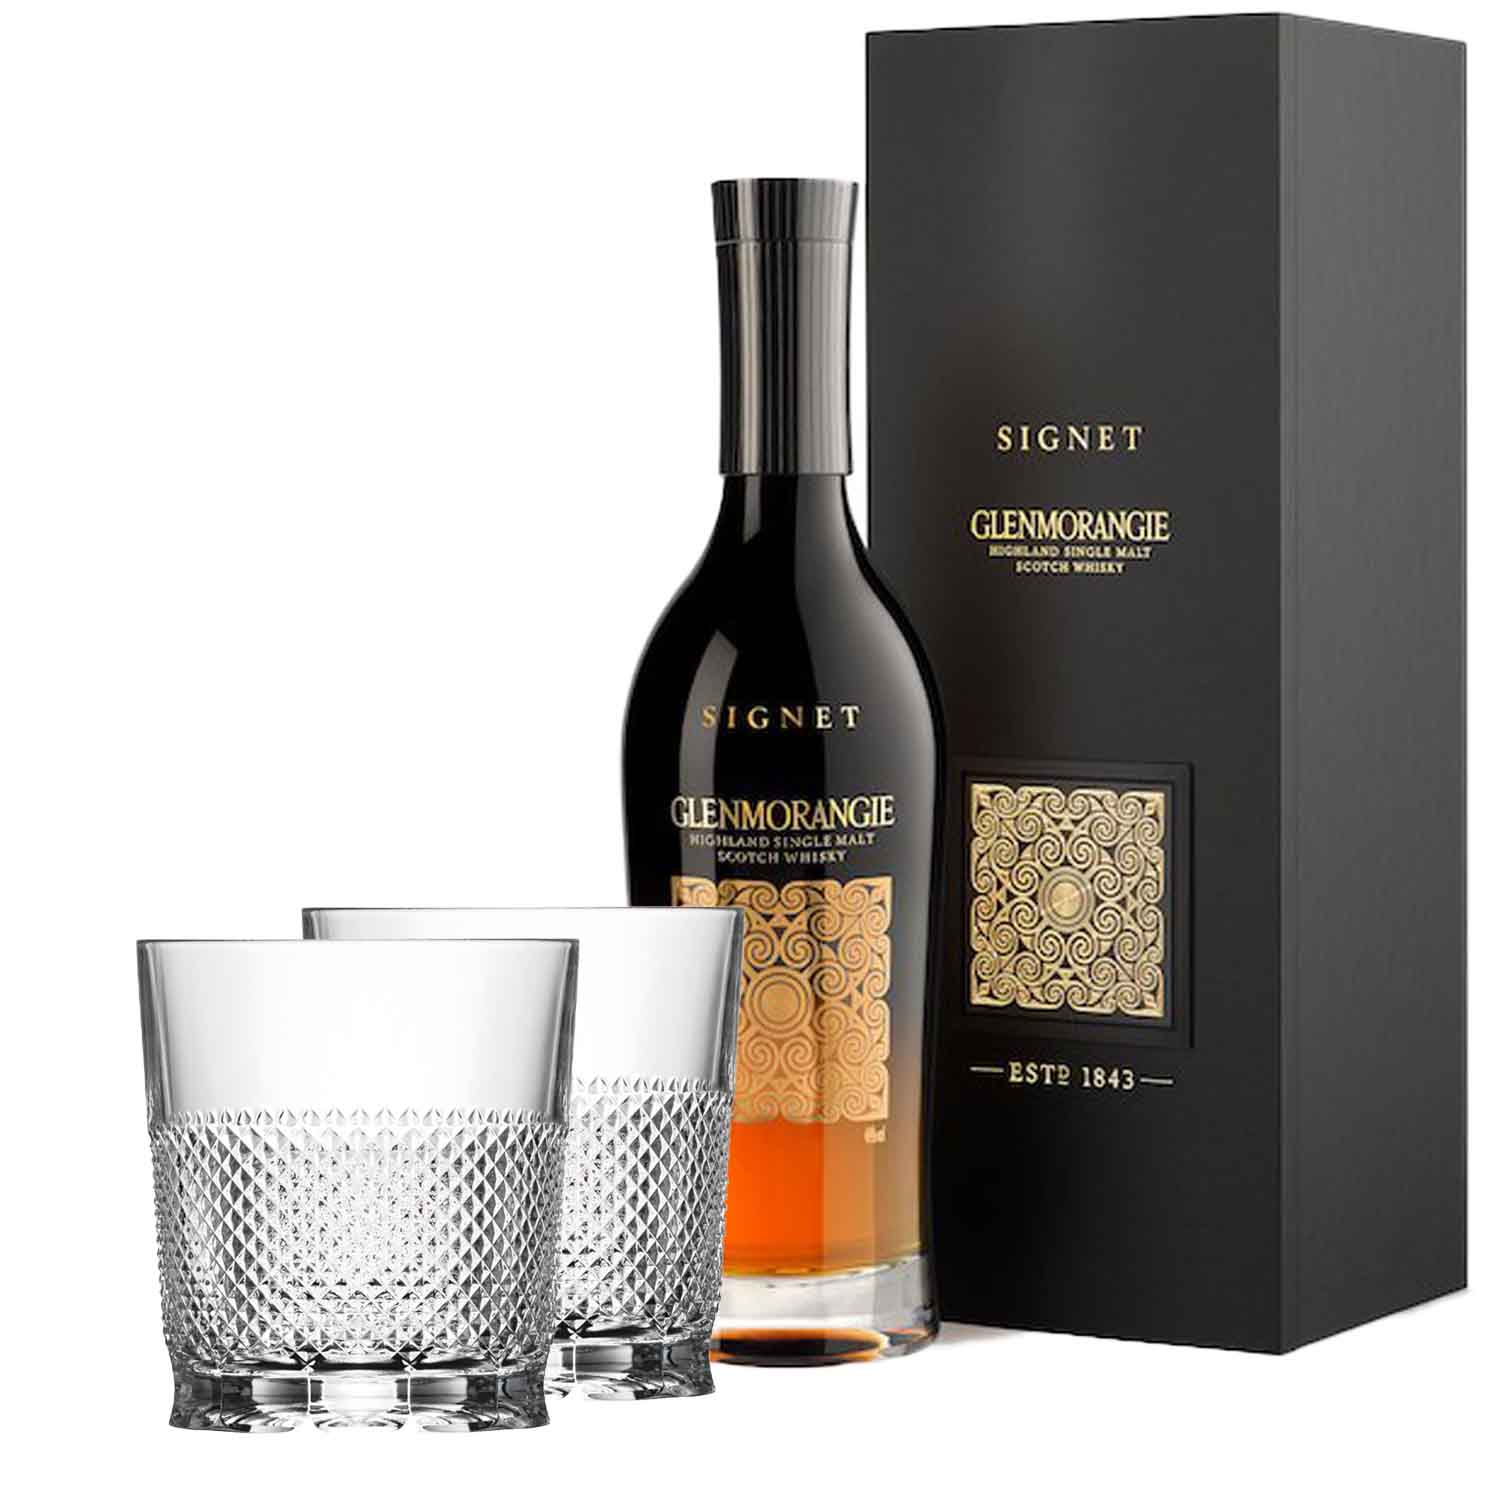 Whisky-Set 2er Whiskyglas Oxford & Glenmorangie Signet